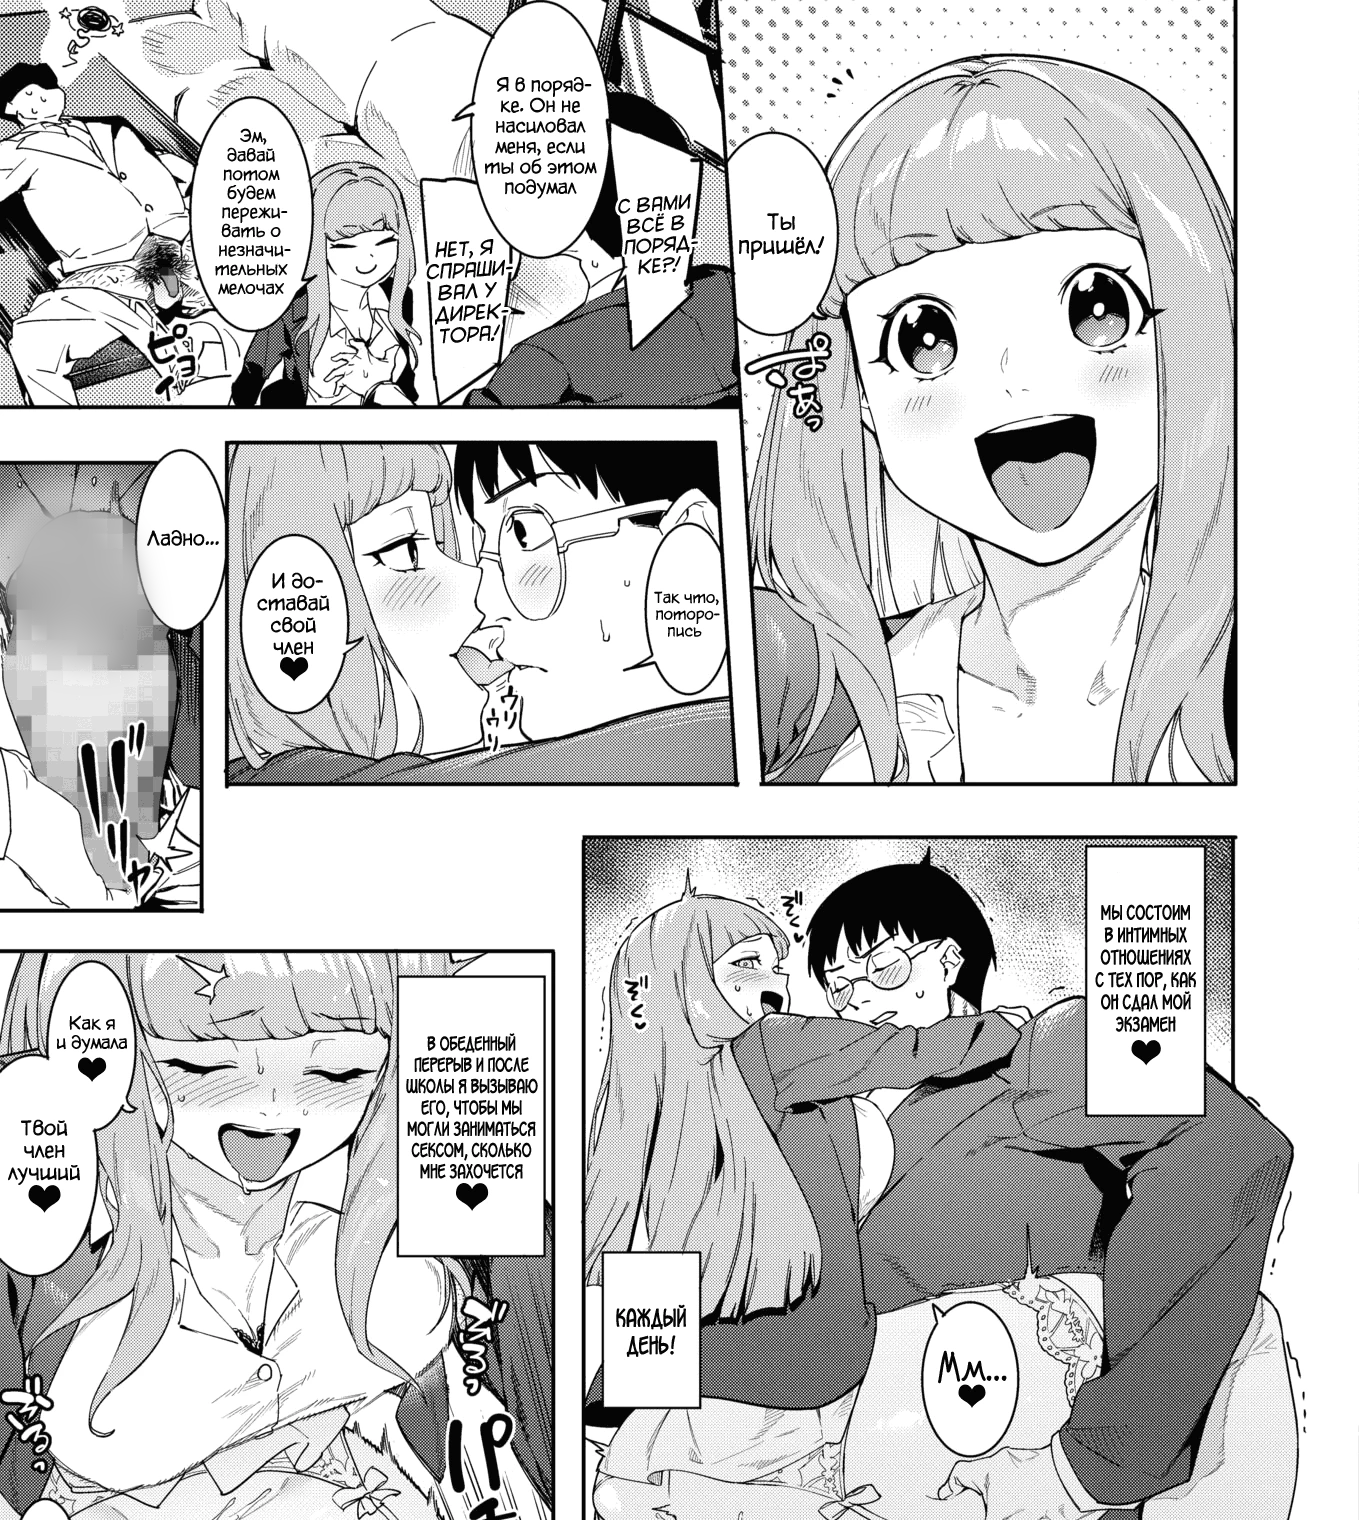 A couple of funny fragments from the manga (part 40) - NSFW, Manga, Hentai, Comedy, Sex, Sex Toys, Vibrator, Sperm, Nymphomaniac, Masturbation, Romance, Longpost